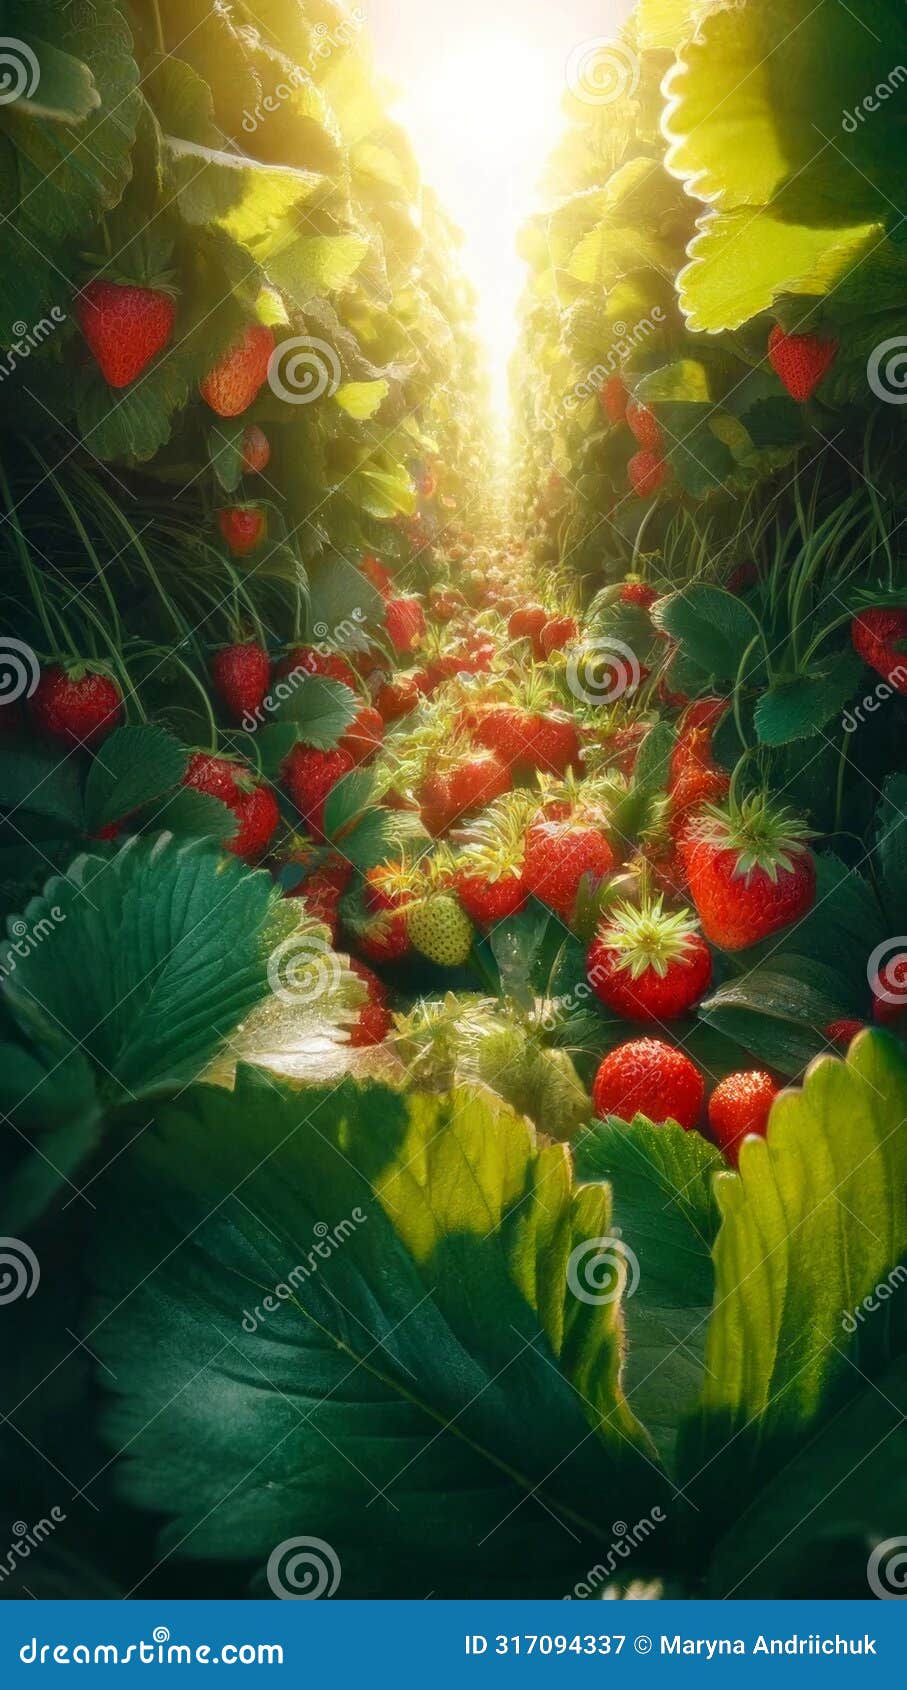 abundant harvest of strawberries in garden